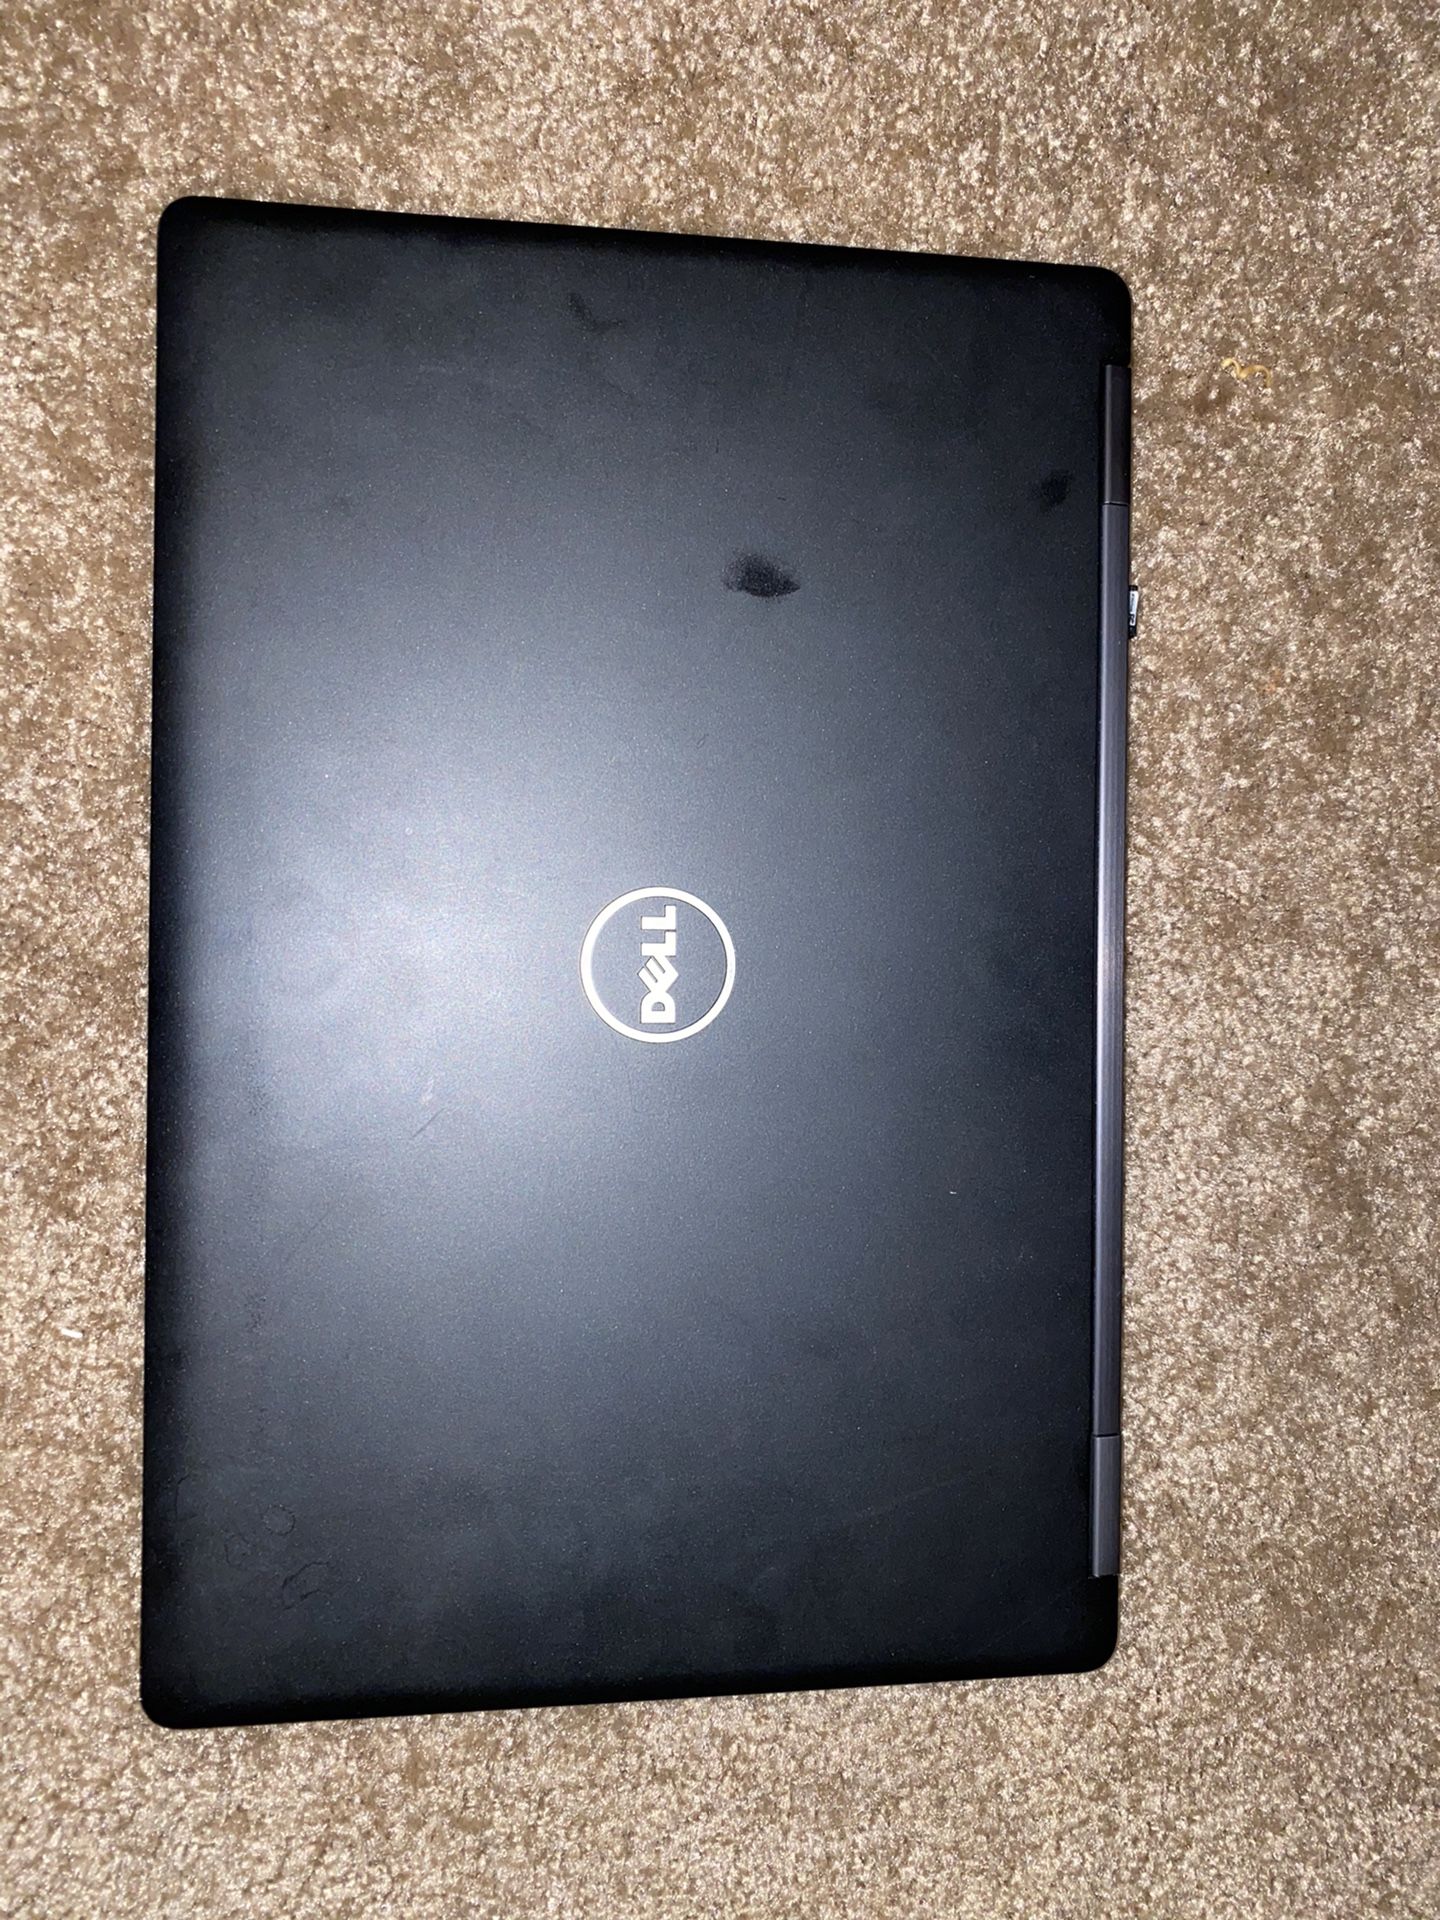 Dell Inspiron 5580 Laptop